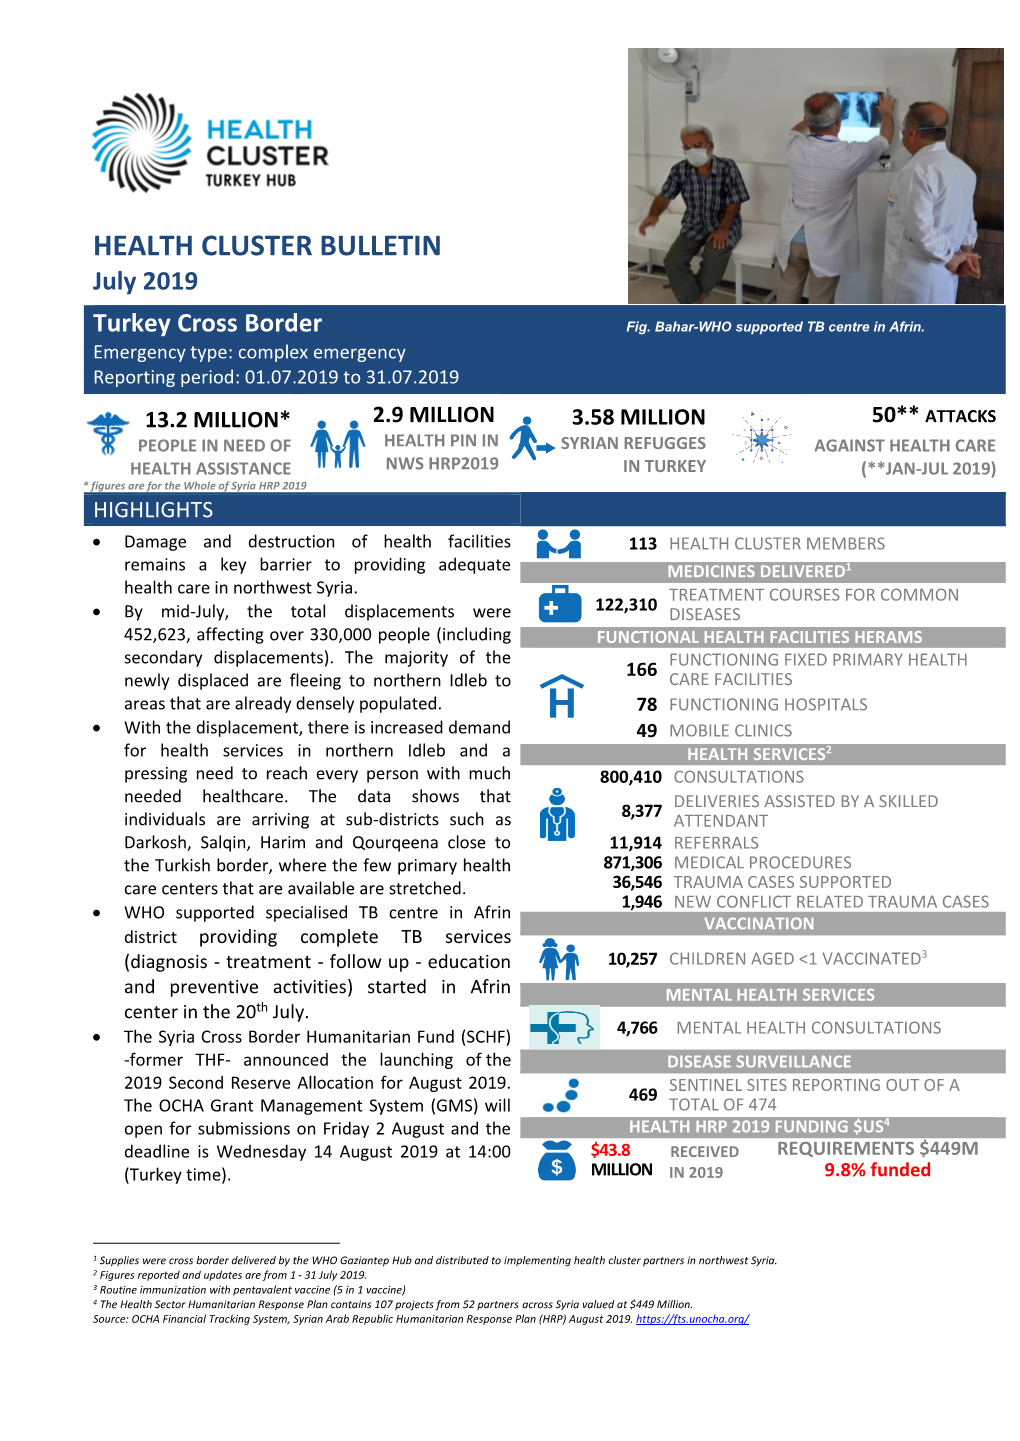 HEALTH CLUSTER BULLETIN July 2019